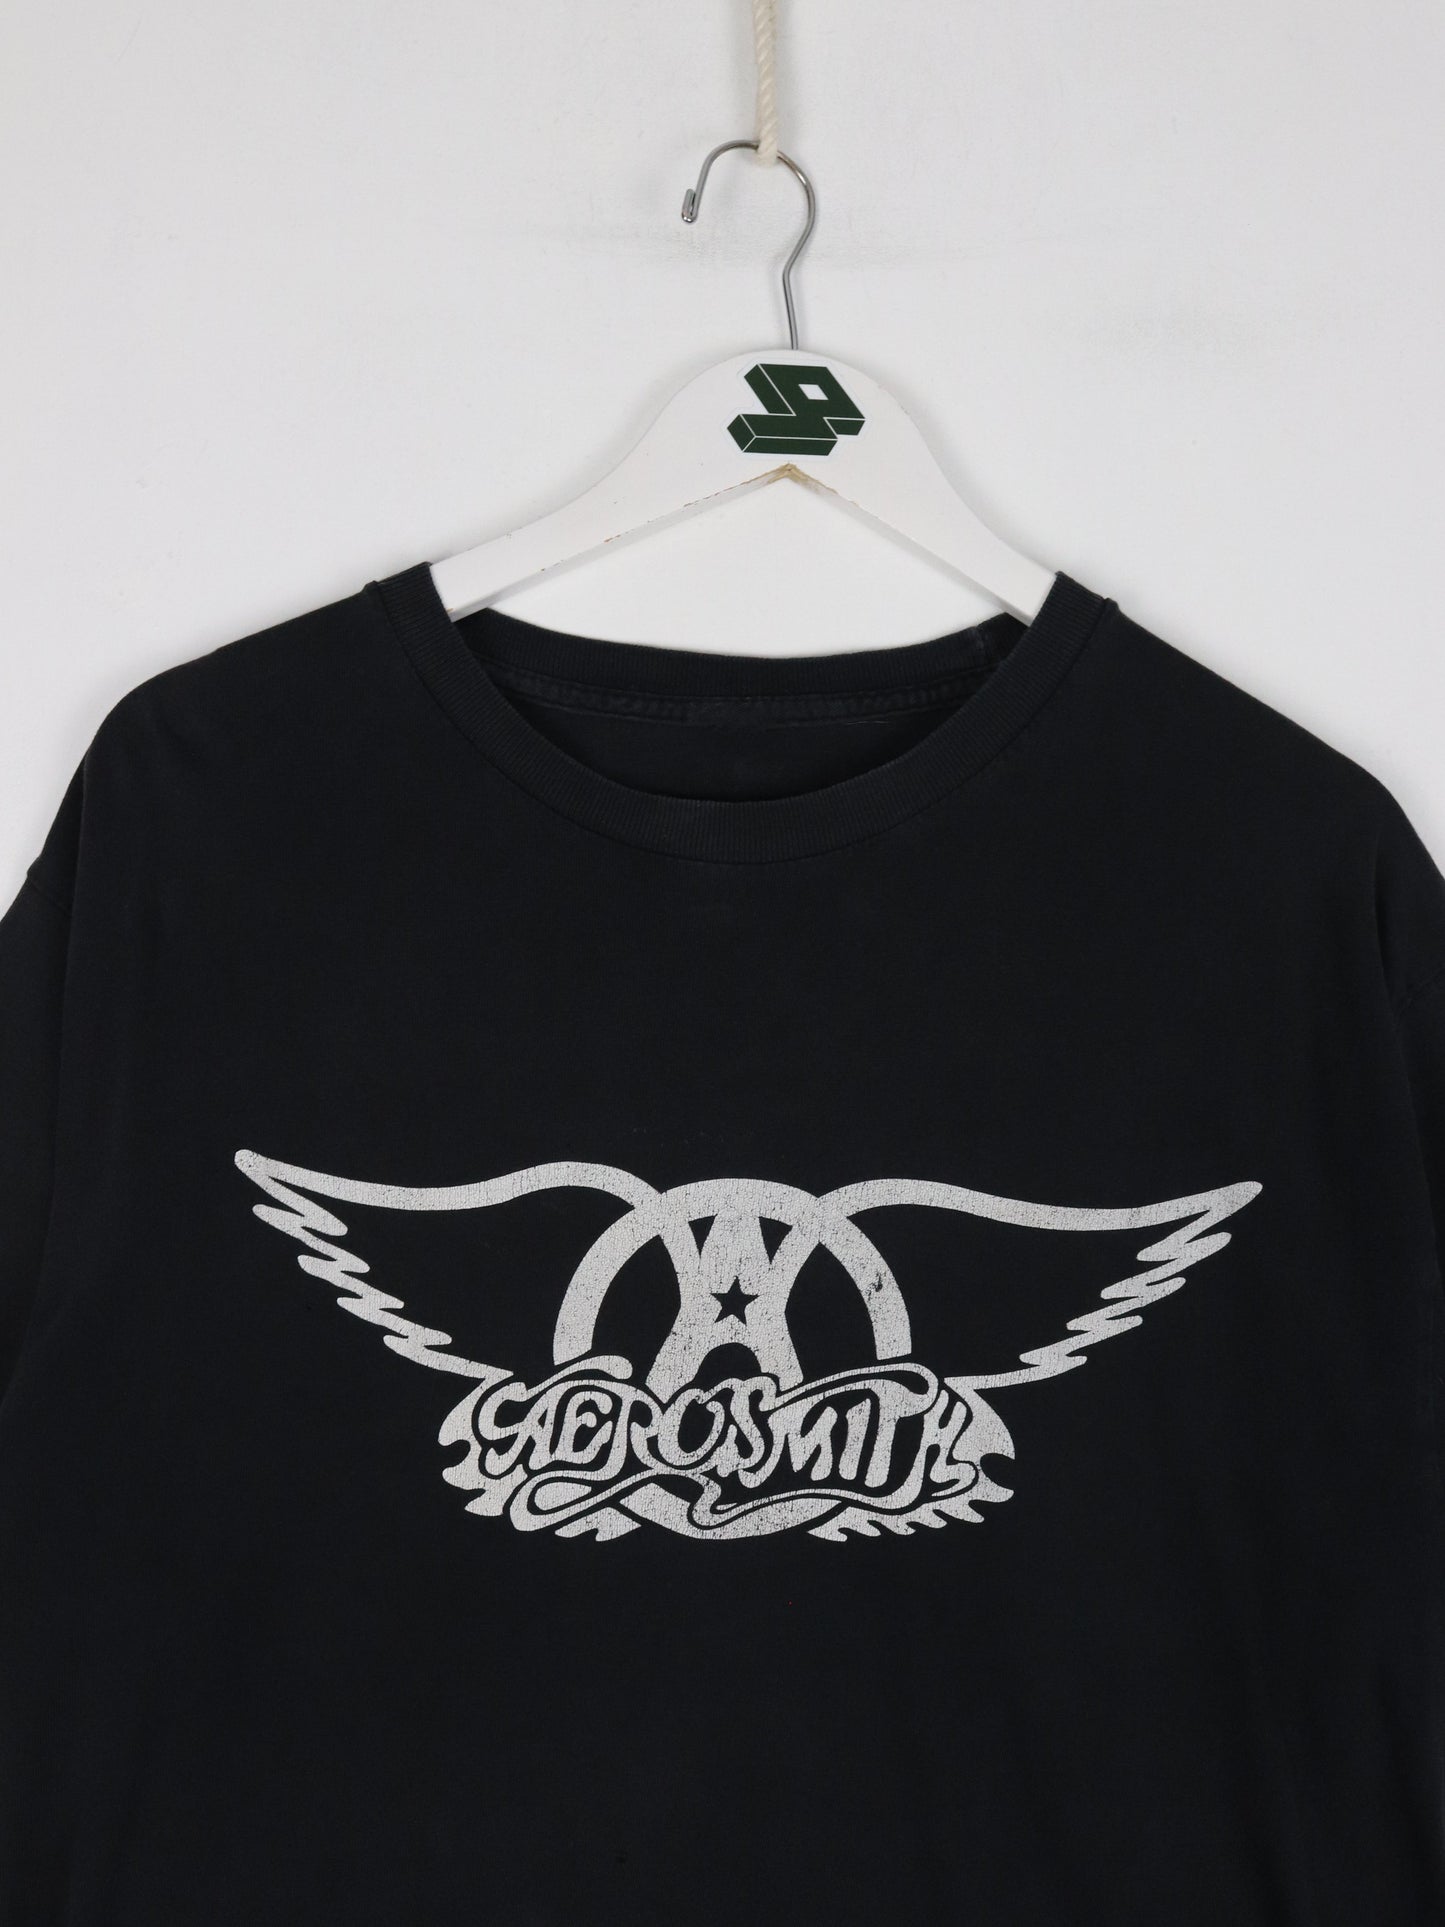 Aerosmith T Shirt Mens Large Black Band